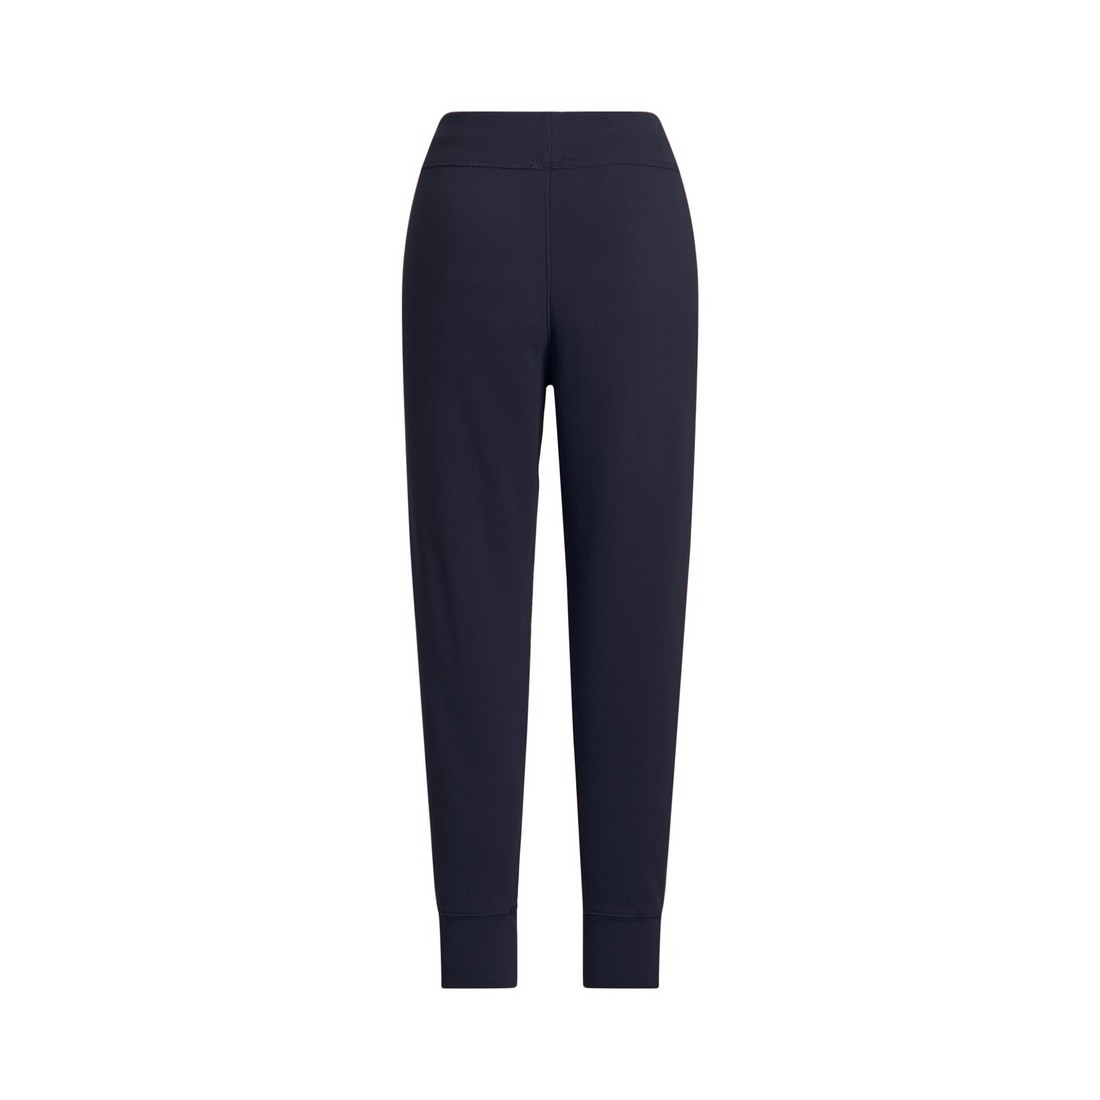 Polo Ralph Lauren Women's Fleece Athletic Trousers - 211891560002 - Fuel